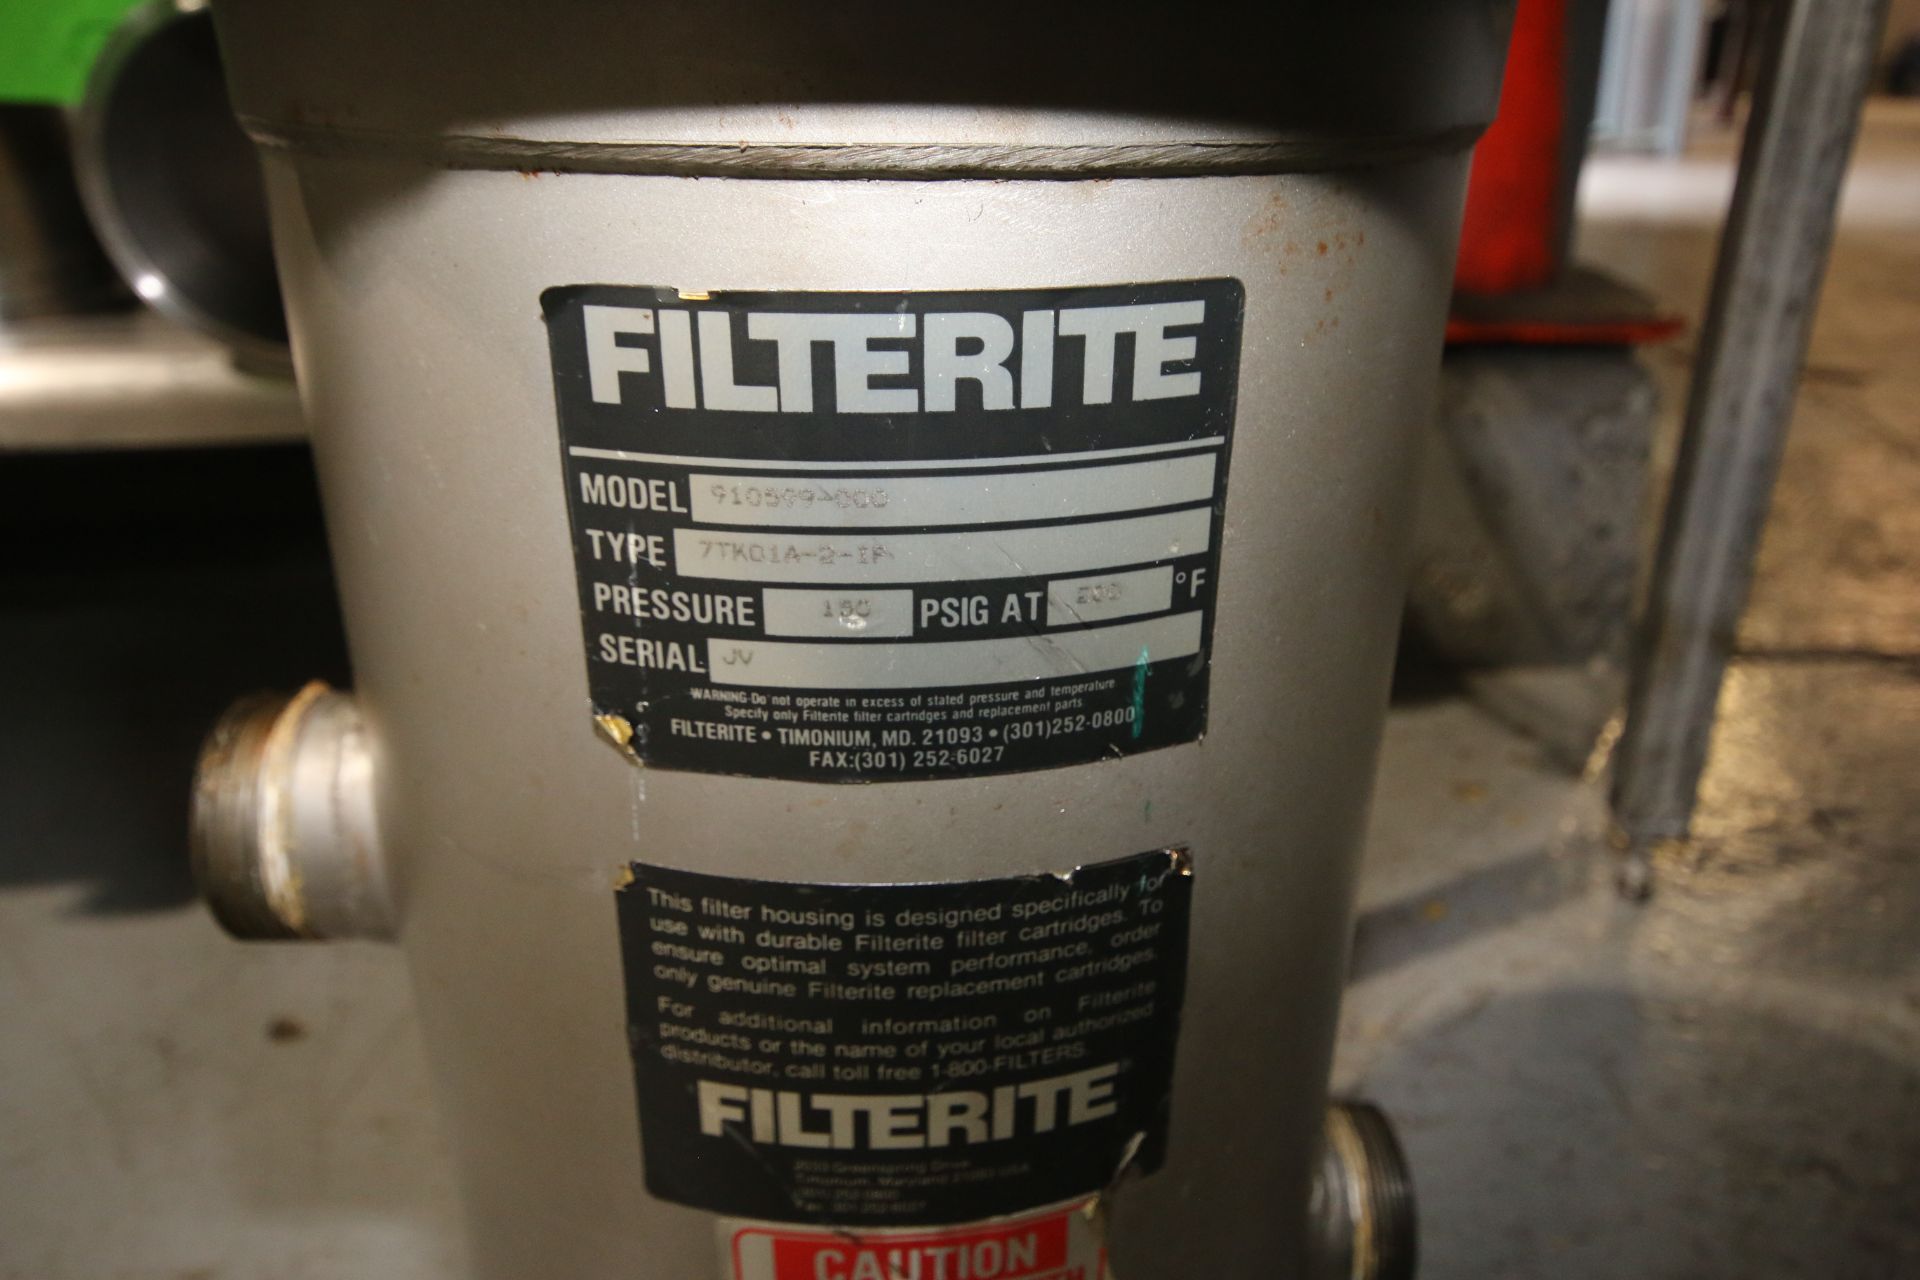 Filterite 2" Threaded S/S Online Filter, Model 910599-000, Type 7TK01A-2-IP, S/N JV, Pressure 150 - Image 2 of 2